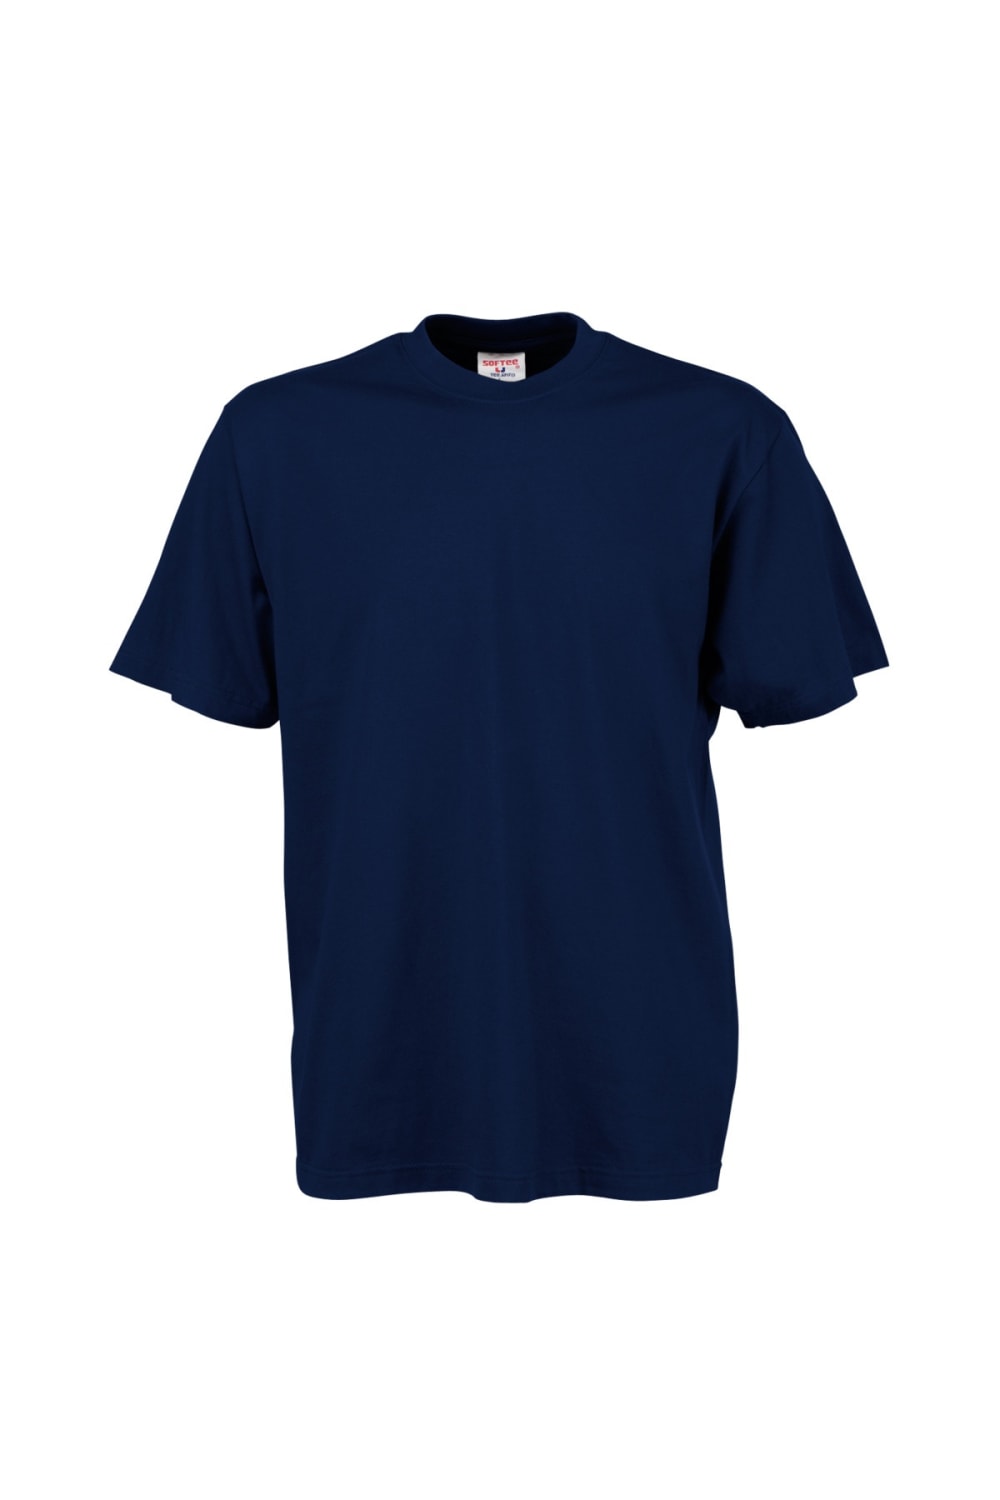 Mens Short Sleeve T-Shirt - Navy Blue